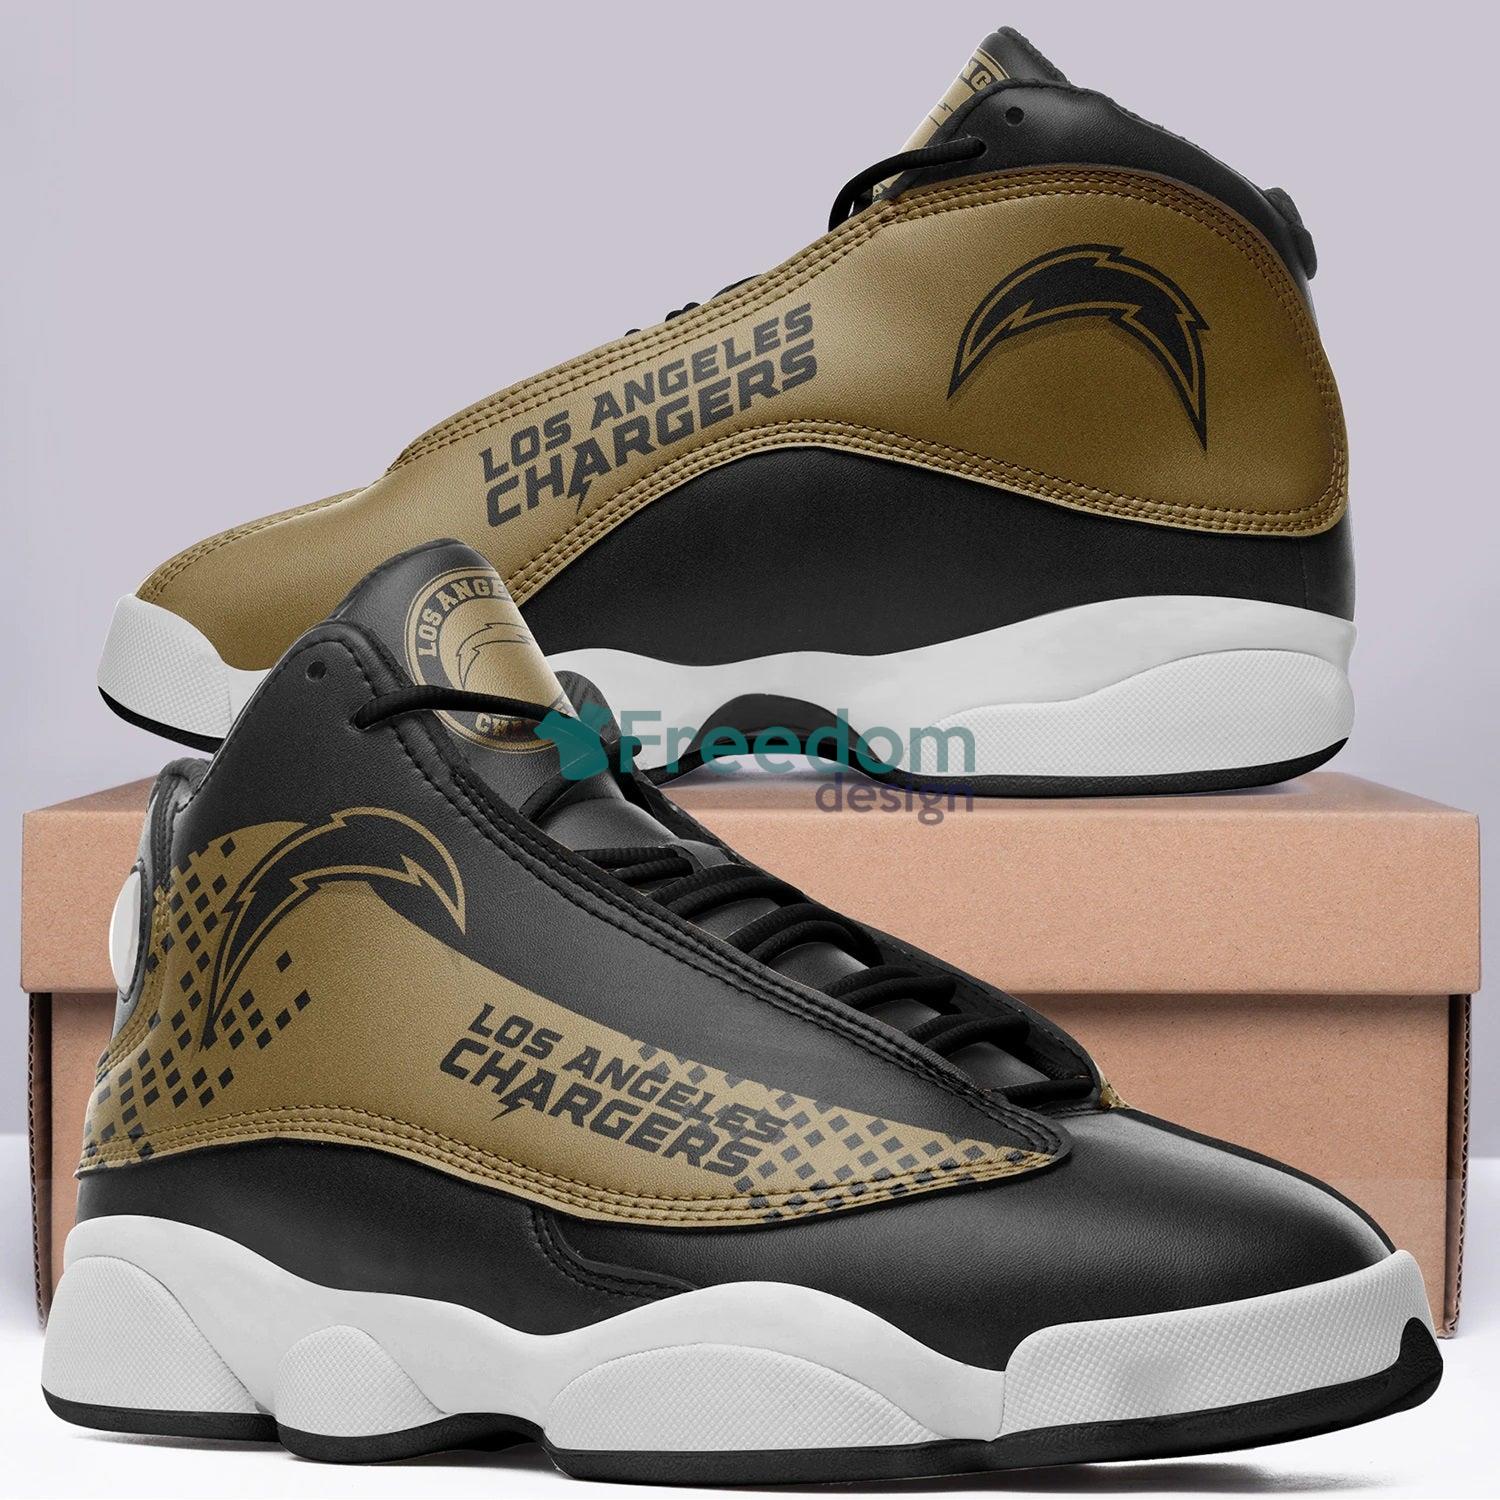 Los Angeles Chargers Team Black Air Jordan 13 Sneaker Shoes For Fans